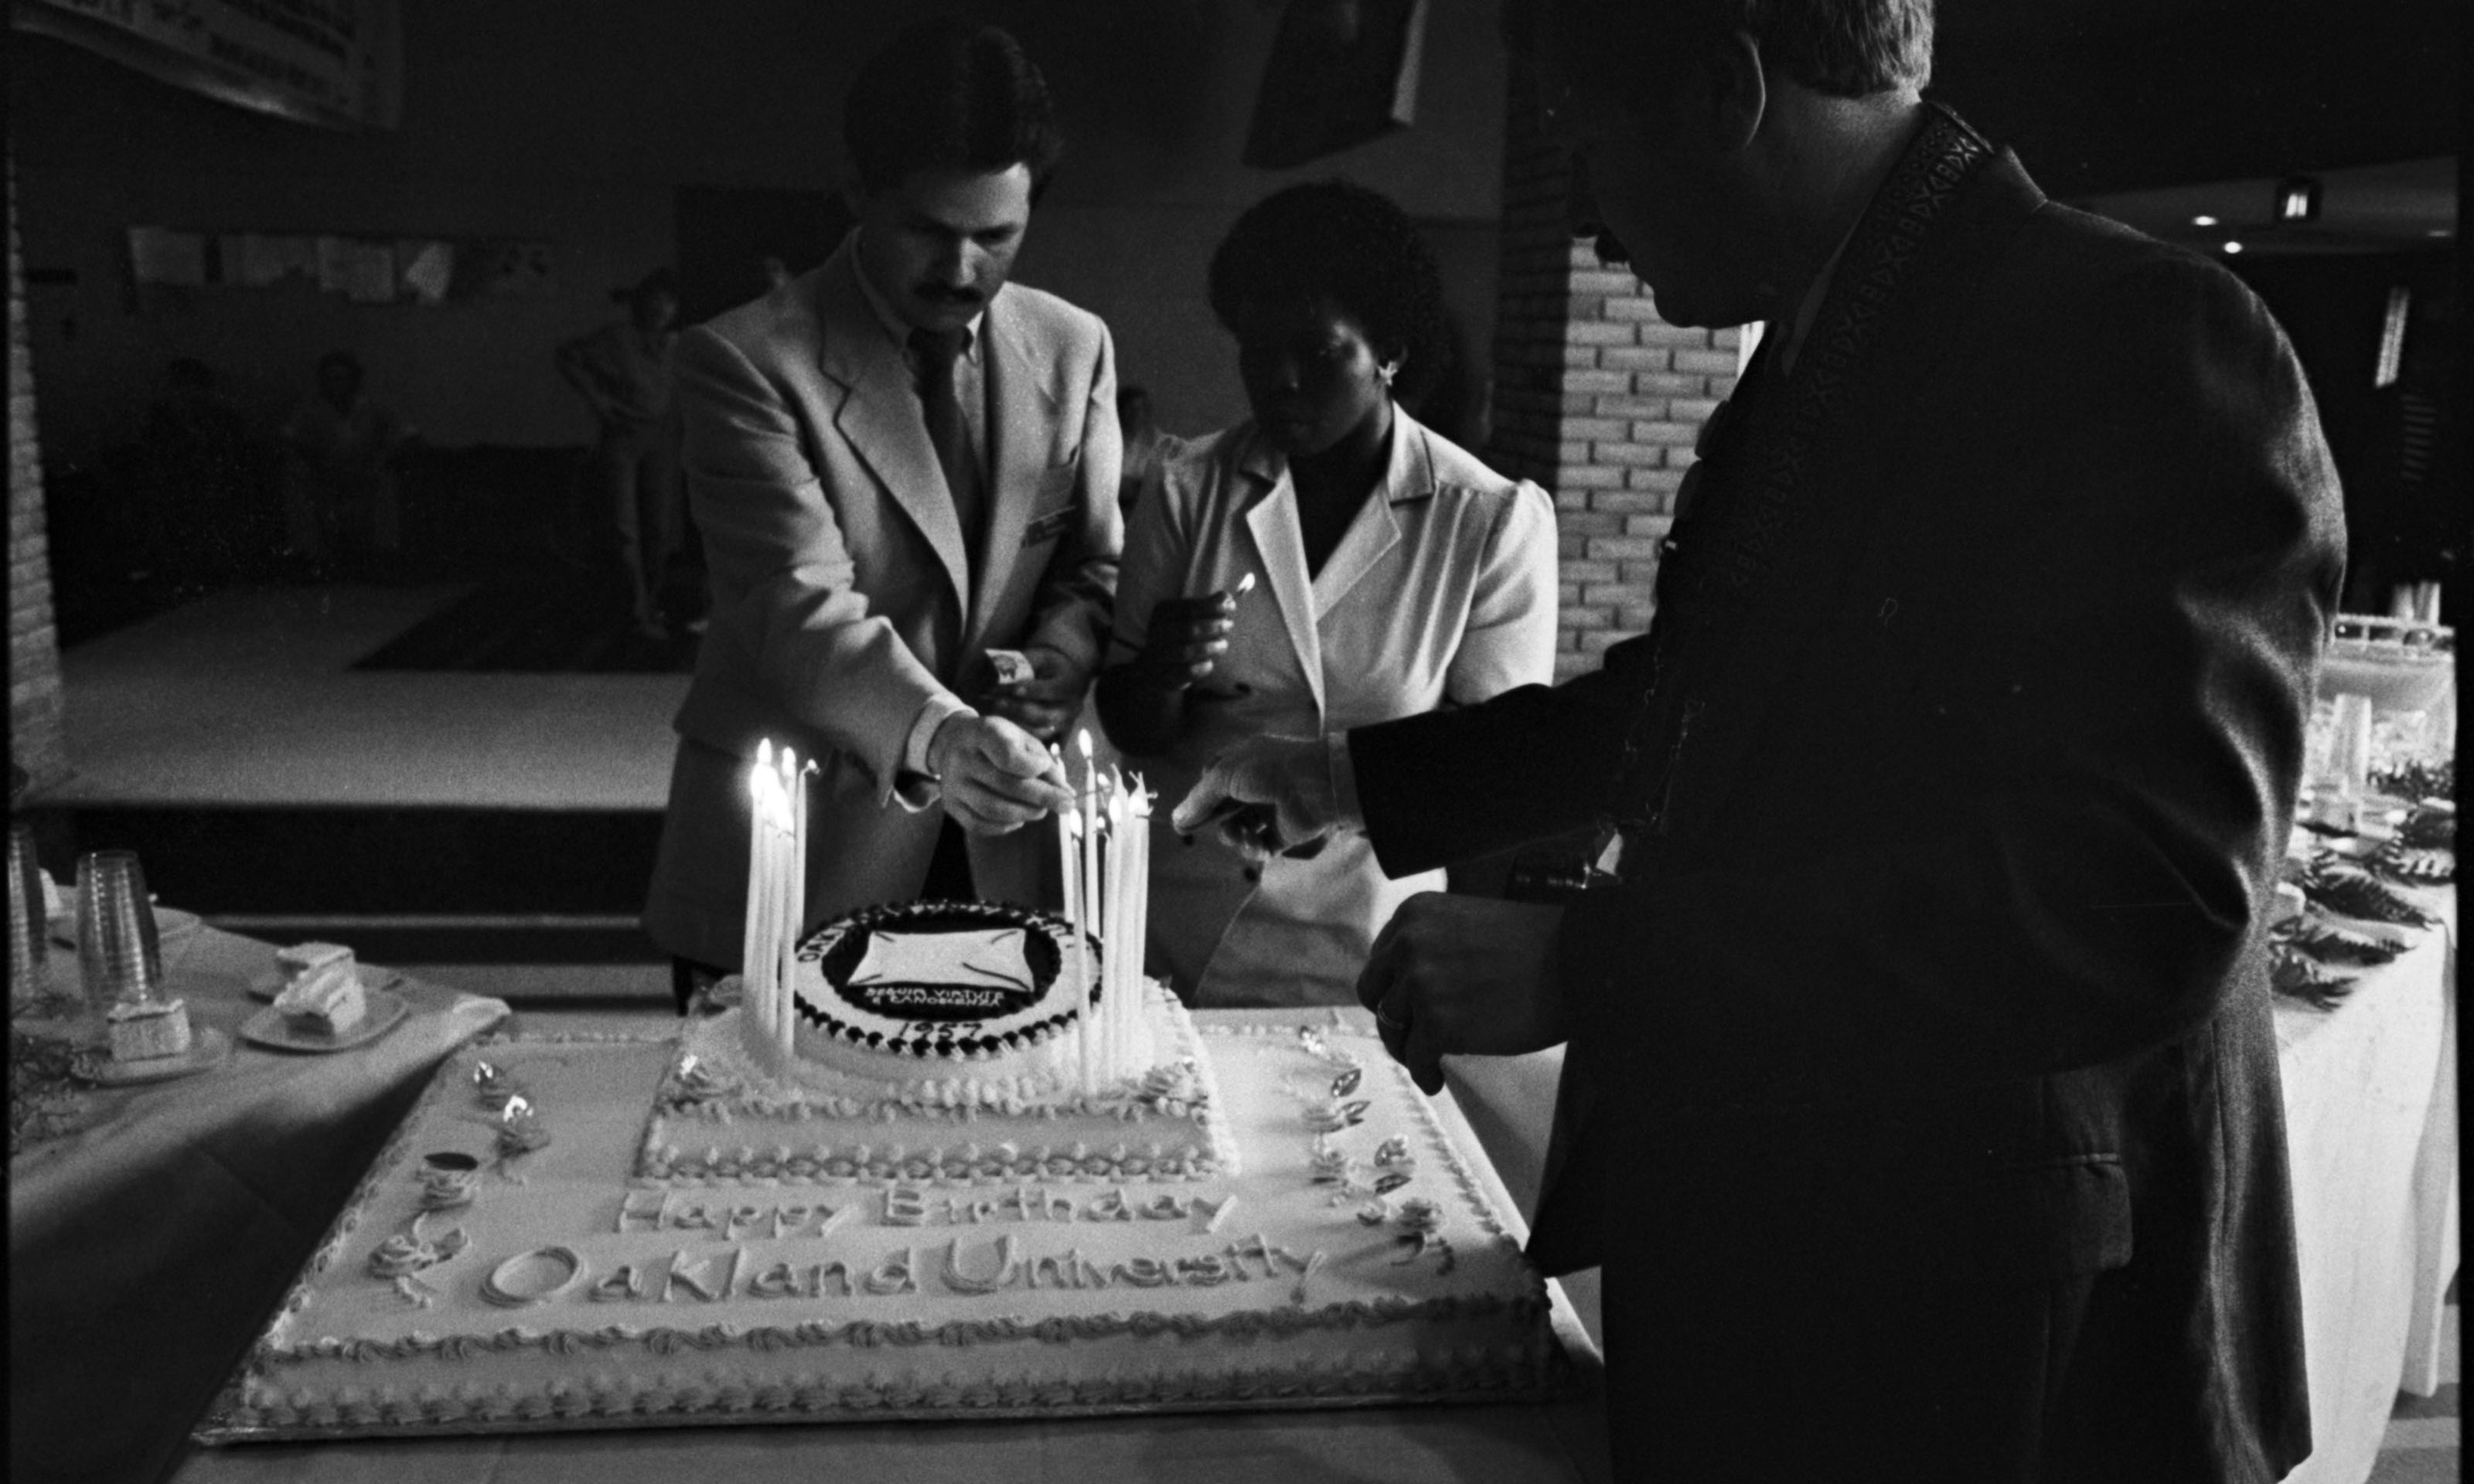 Three people lighting cake with text "Happy Birthday Oakland University"